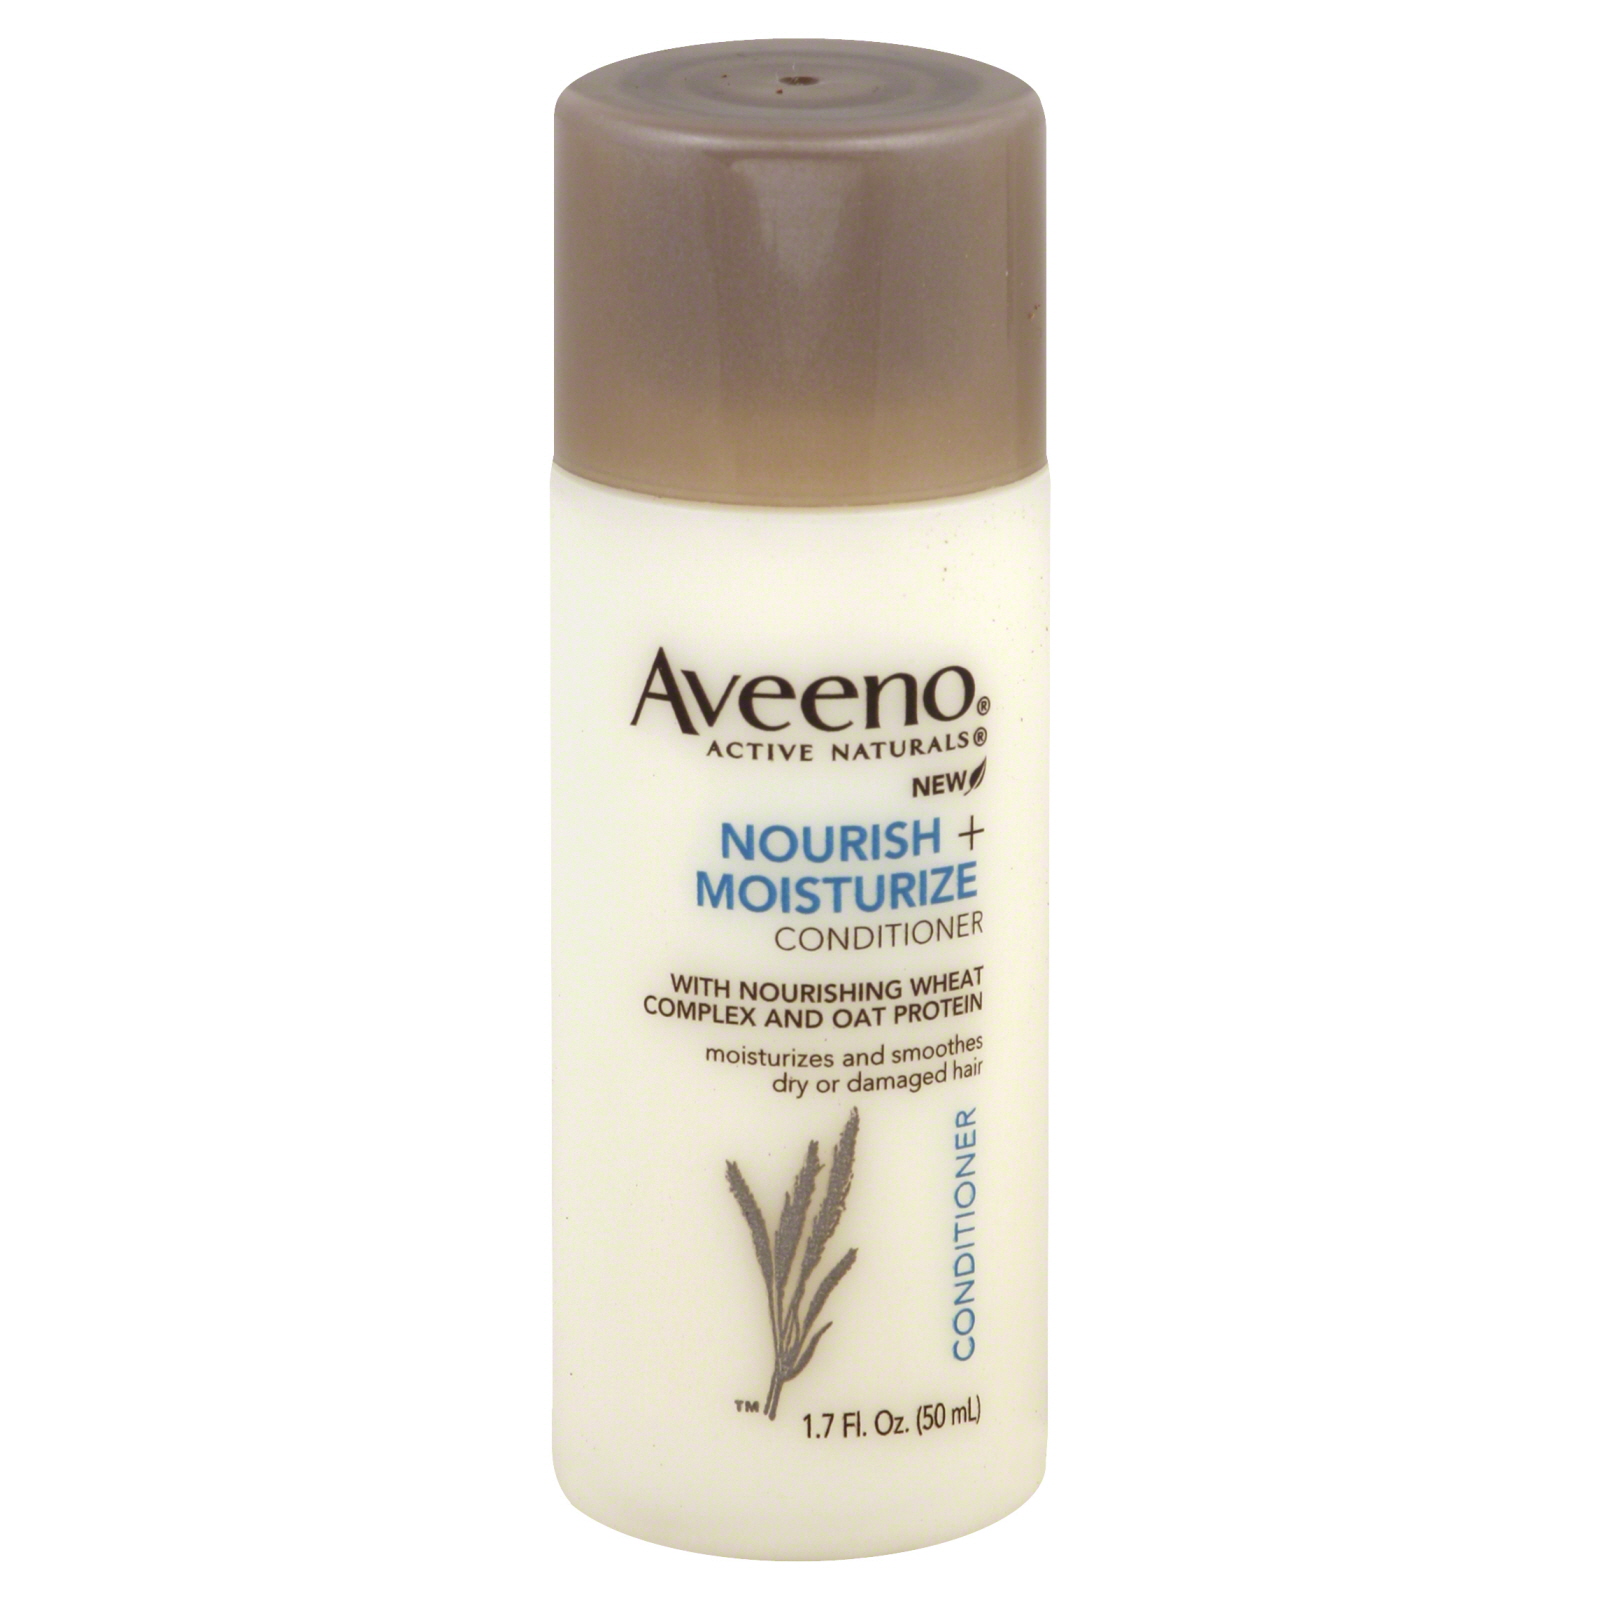 Aveeno Active Naturals Nourish And Moisture Conditioner 1.7 fl oz